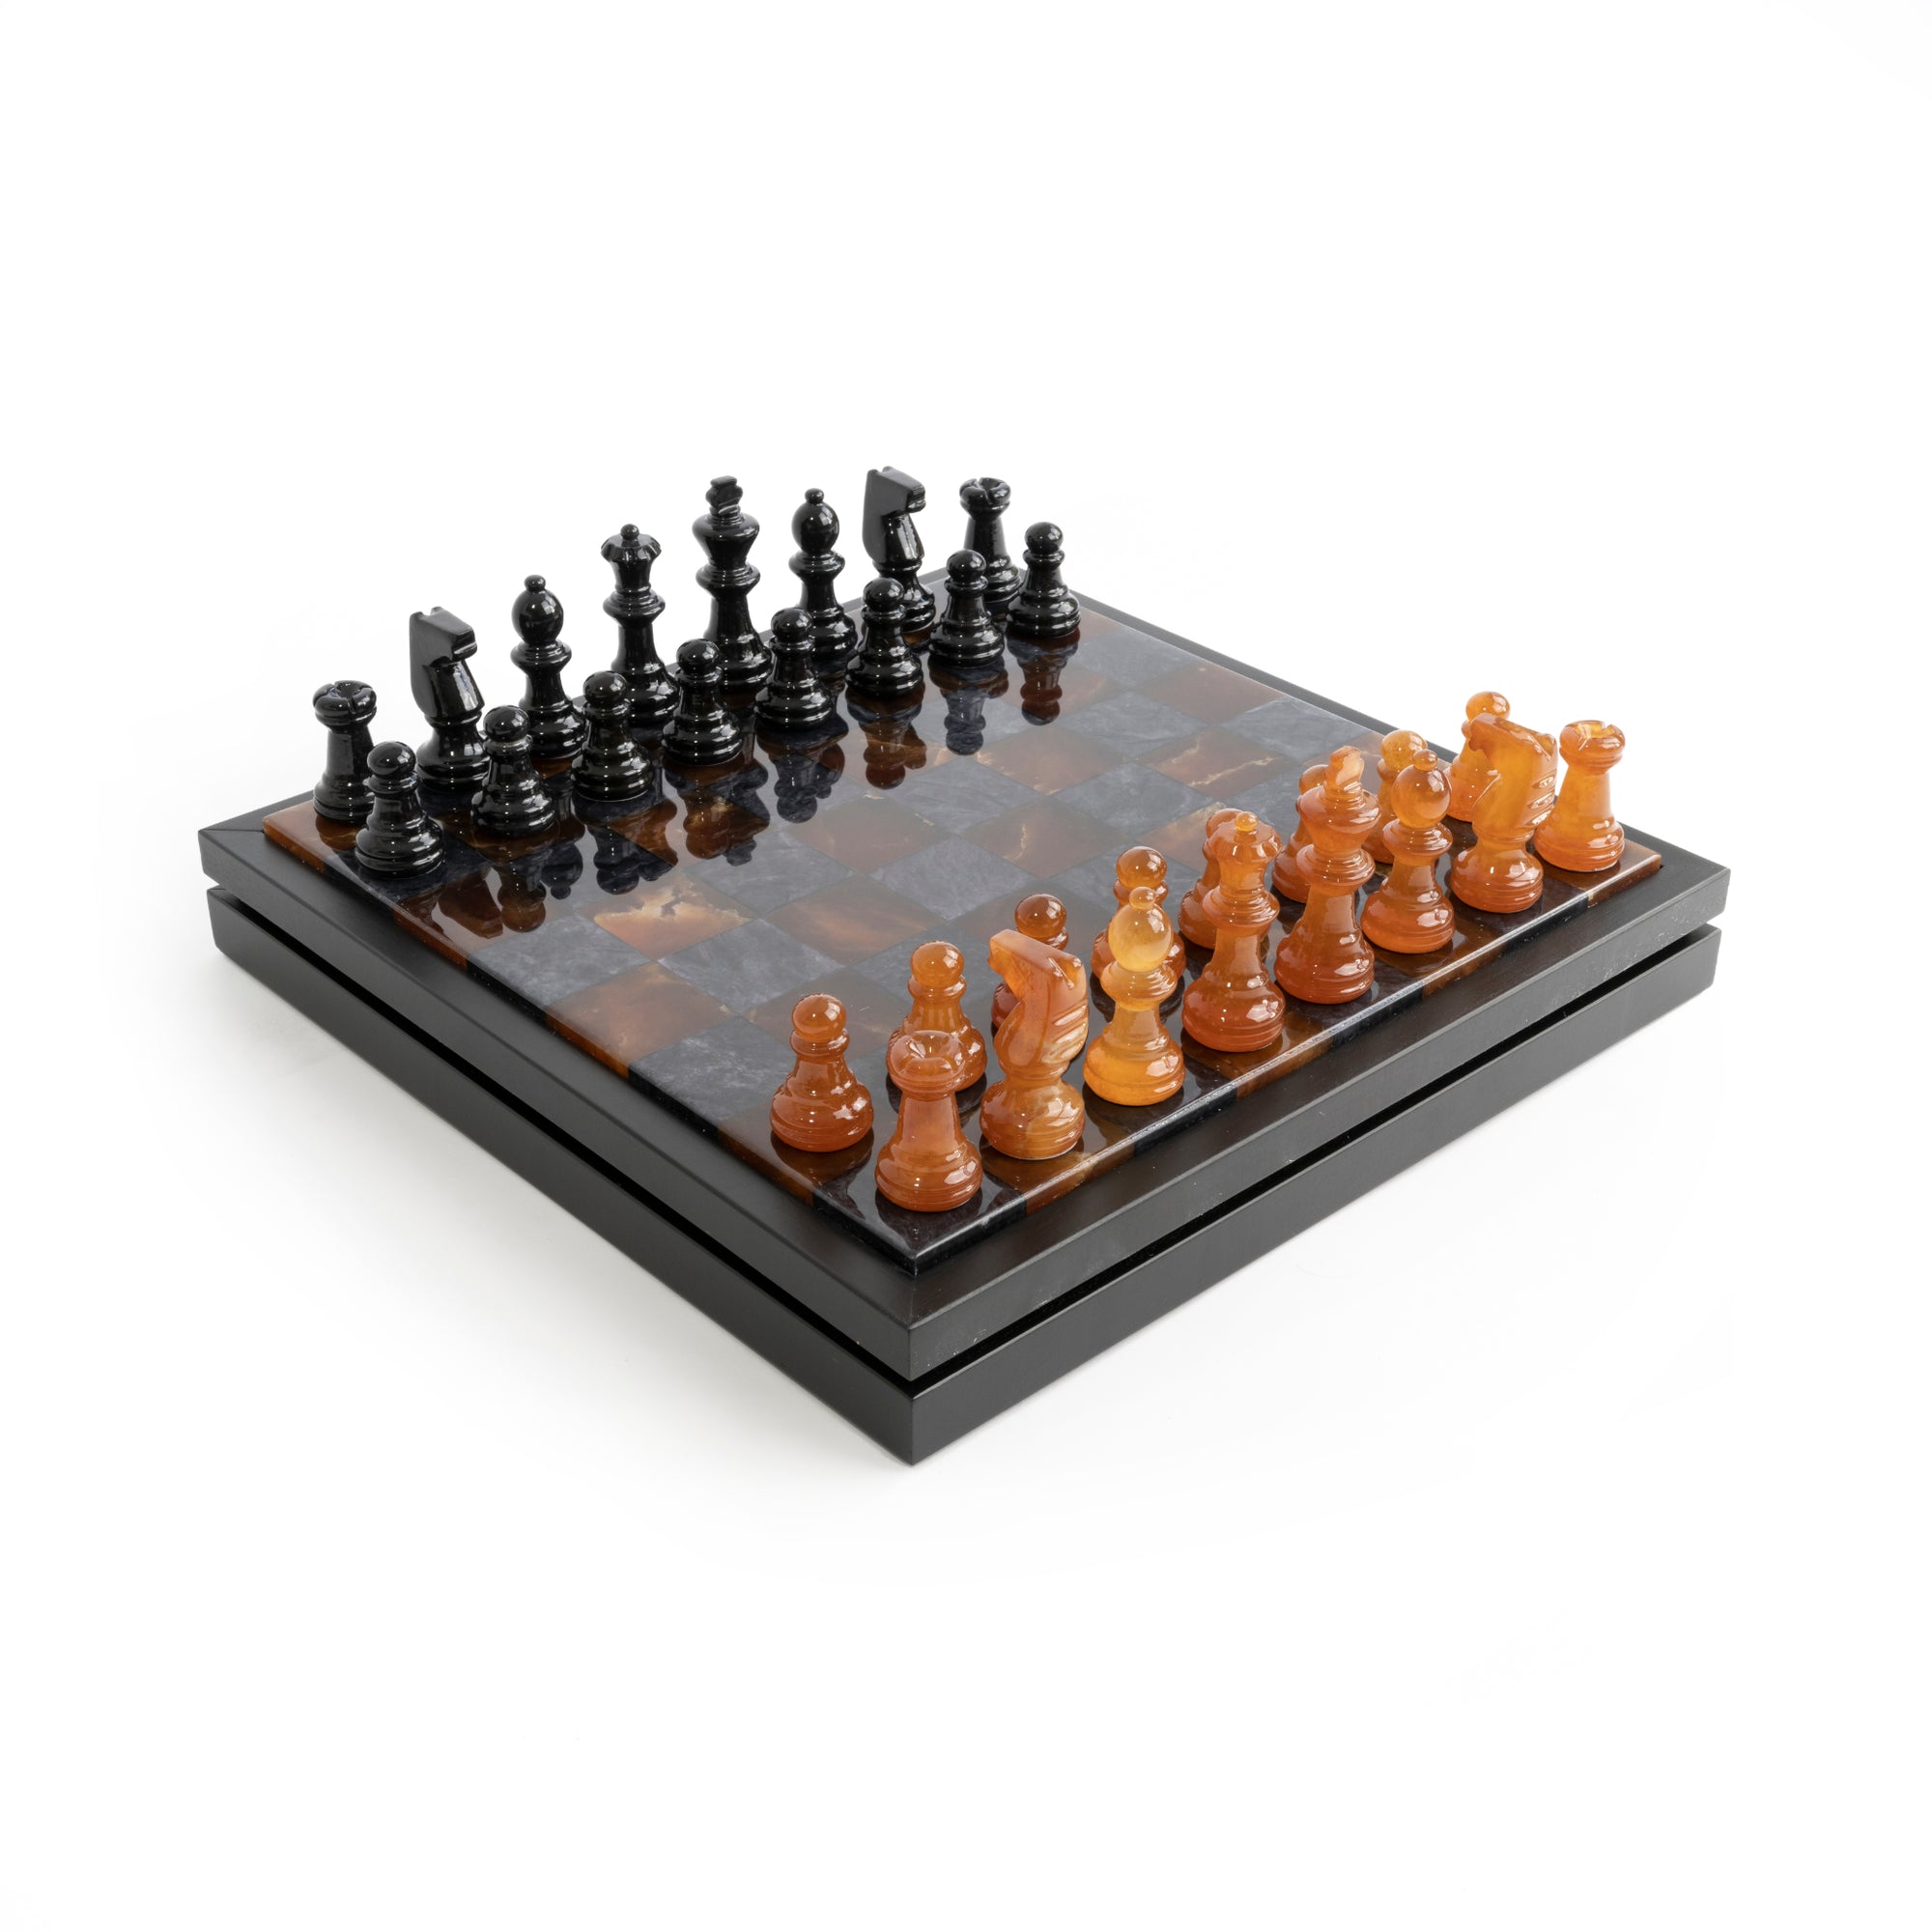 Scali-alabastro-14034_NS-Nero-Bruno-alabaster-brown-black-marble-stone-quality-chess-set-australia-italian-italy-hand-made-storage-chess-board-hero-white.jpg